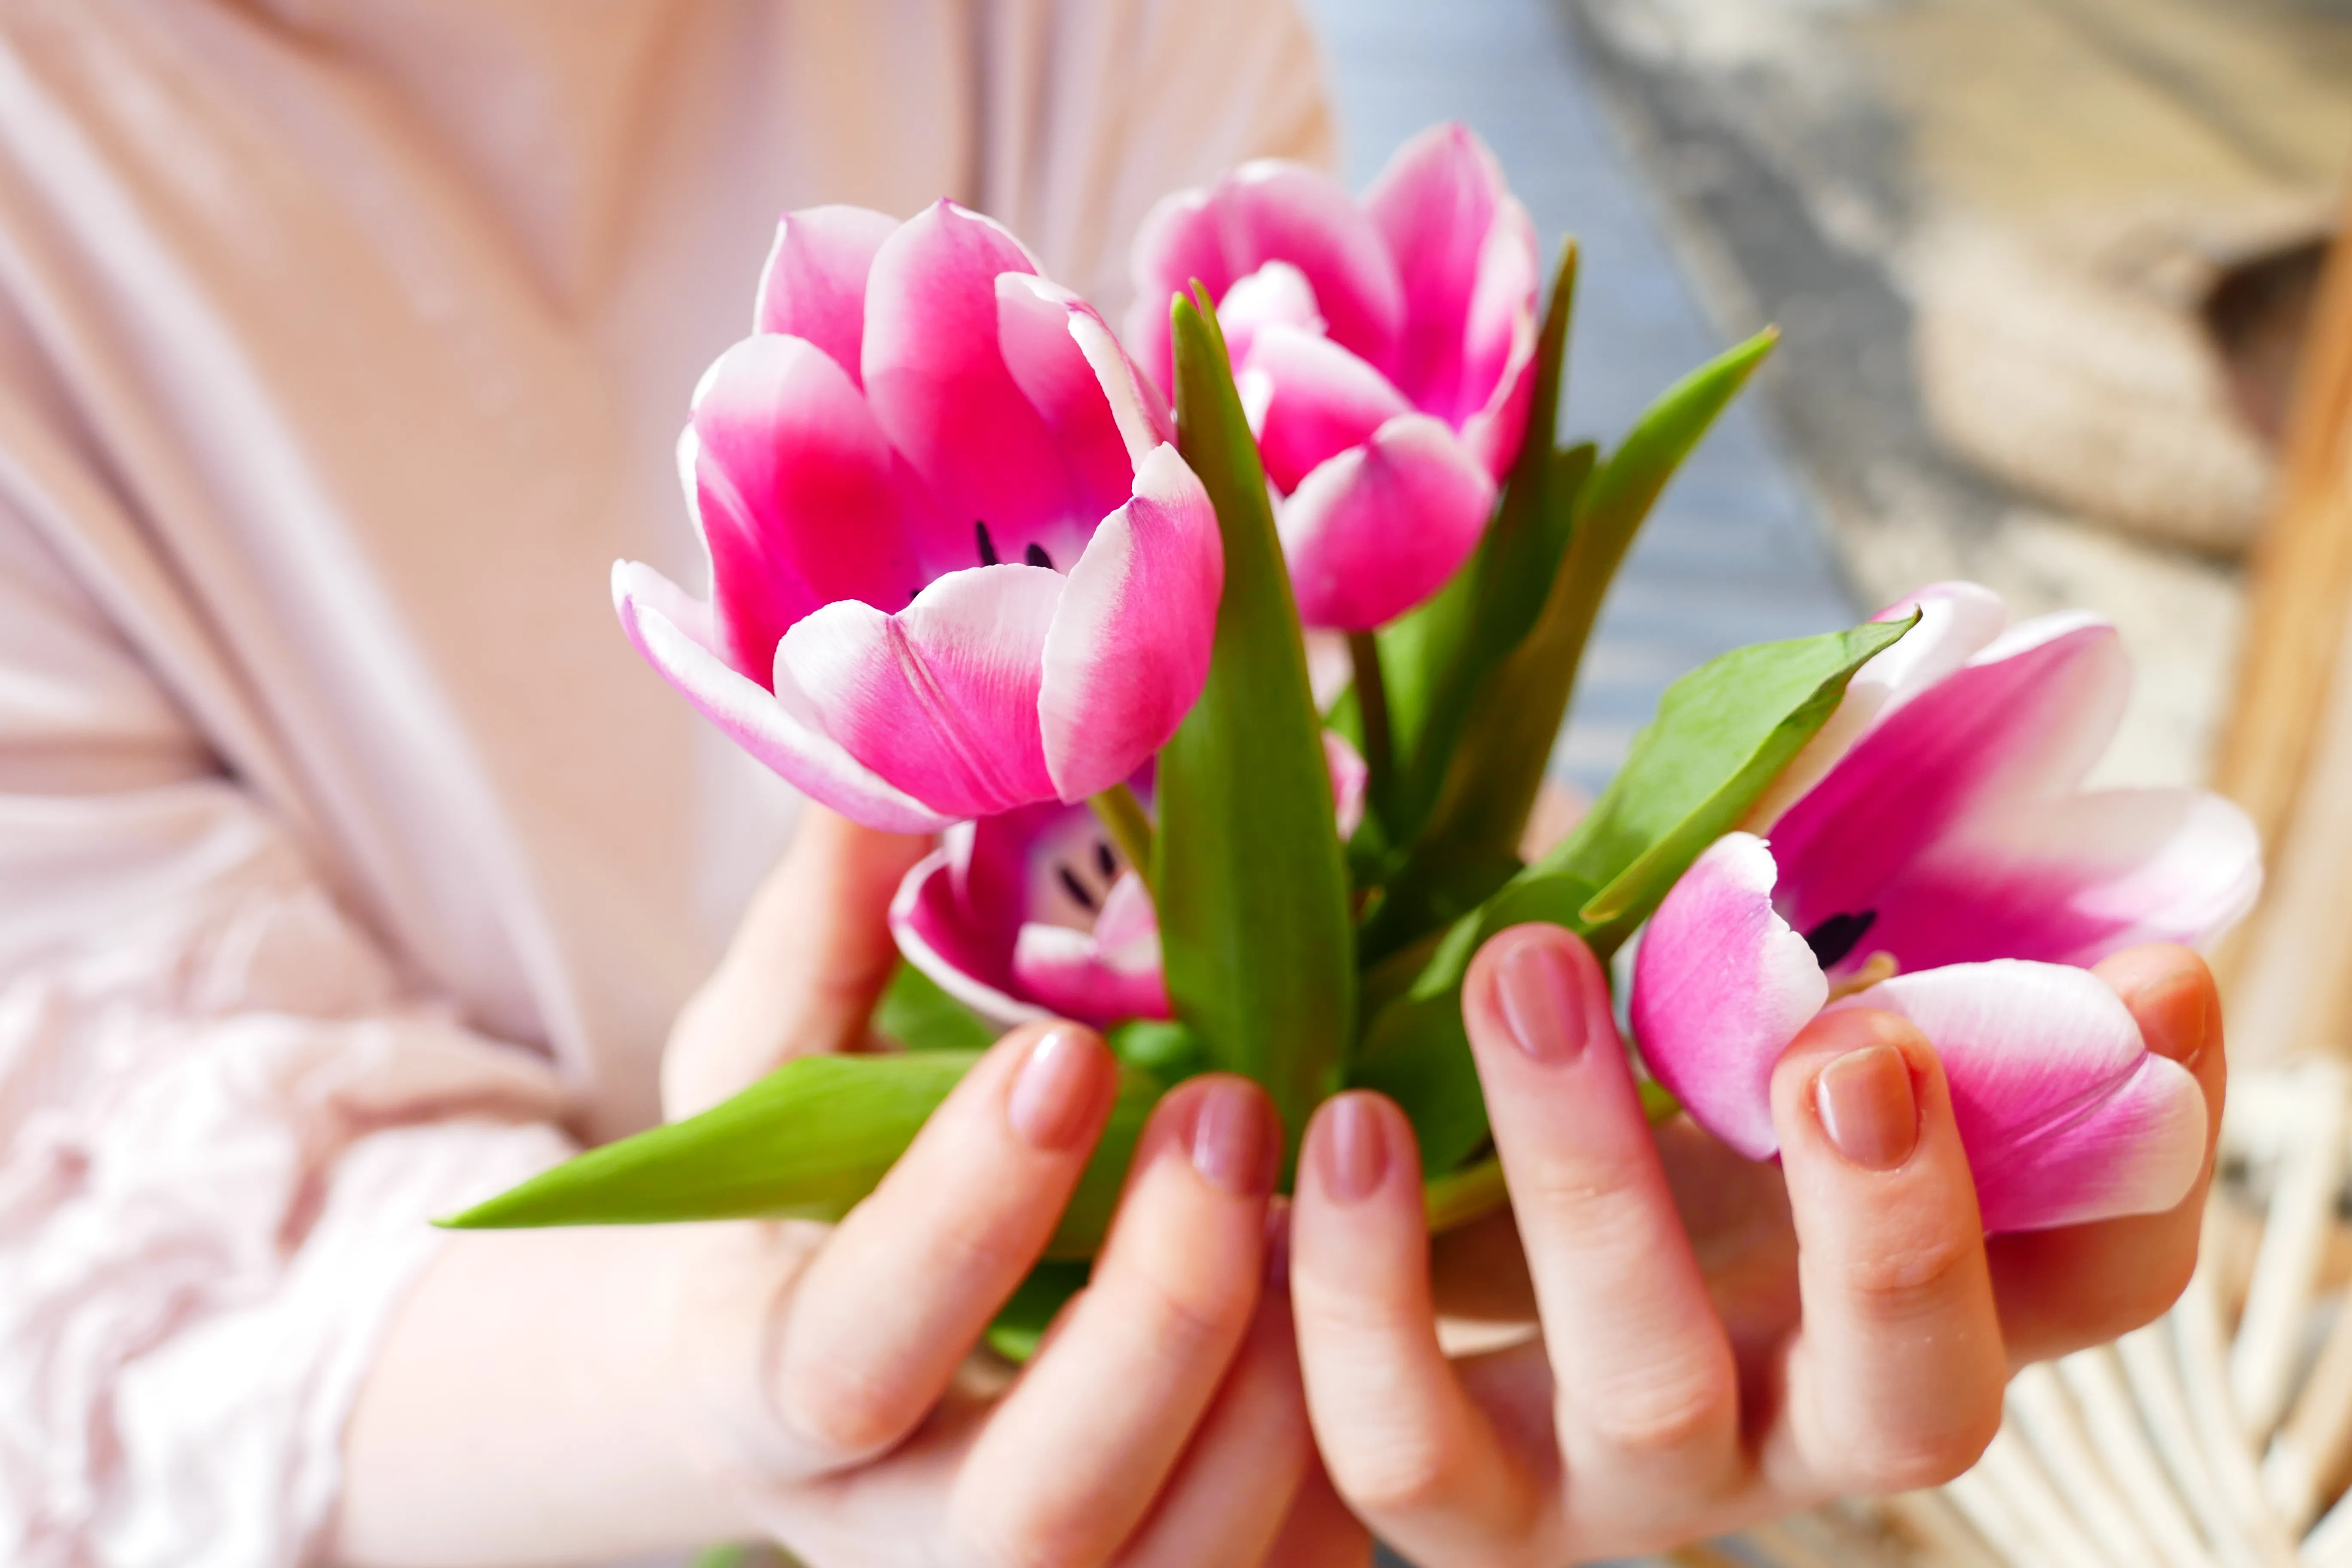 Hände halten pinke Tulpen